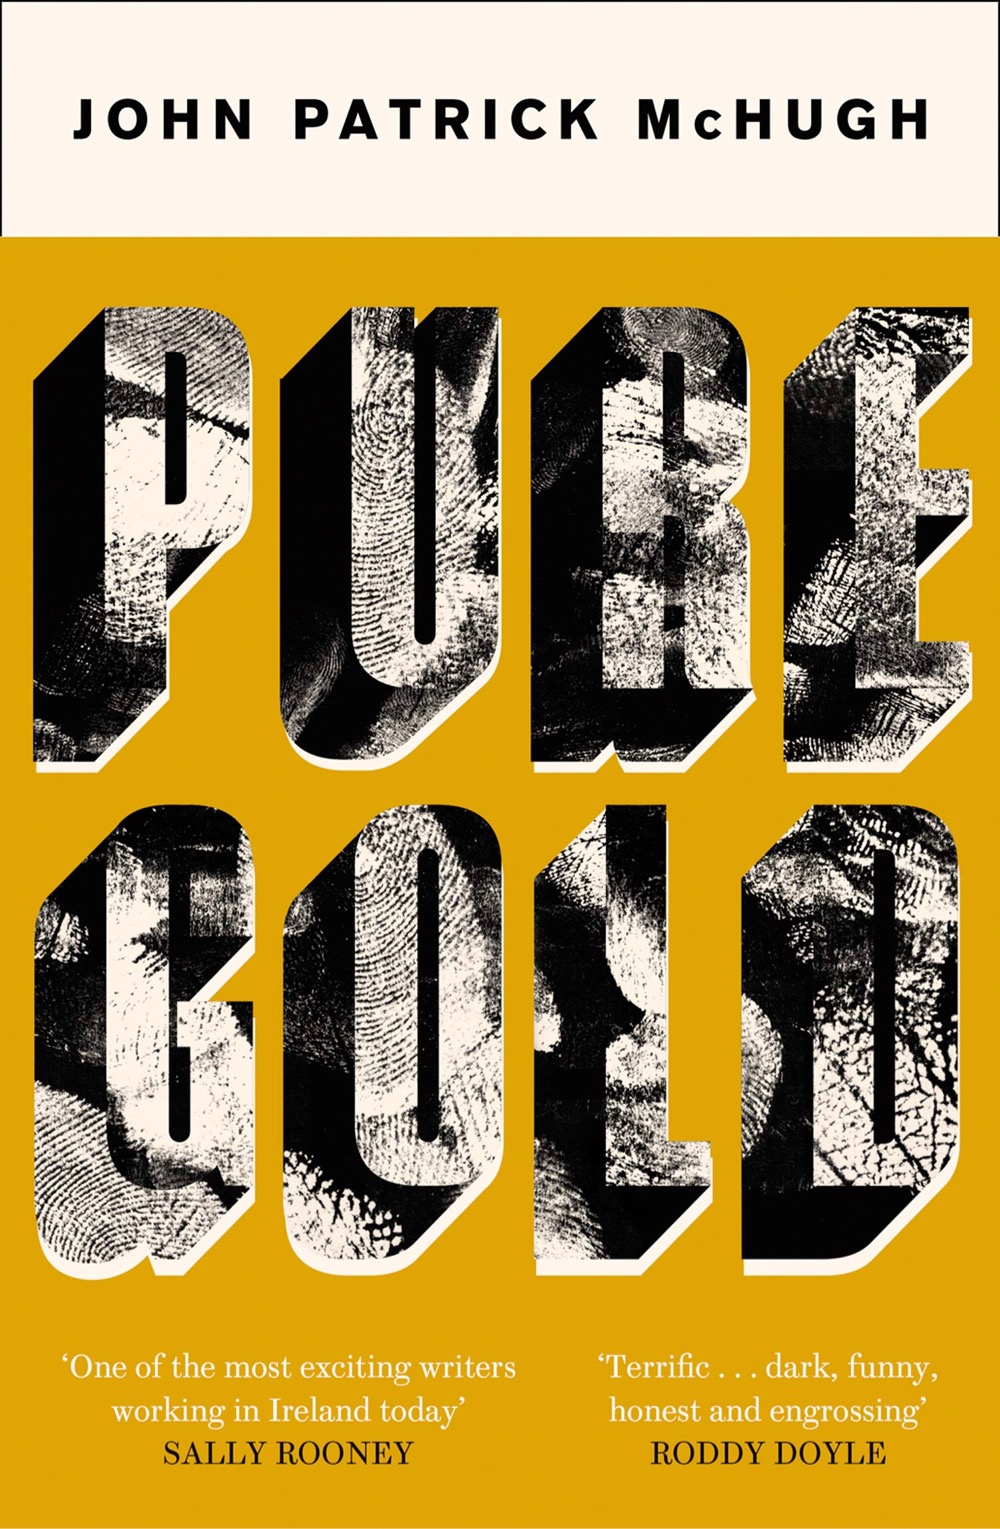 John Patrick McHugh's Pure Gold book cover